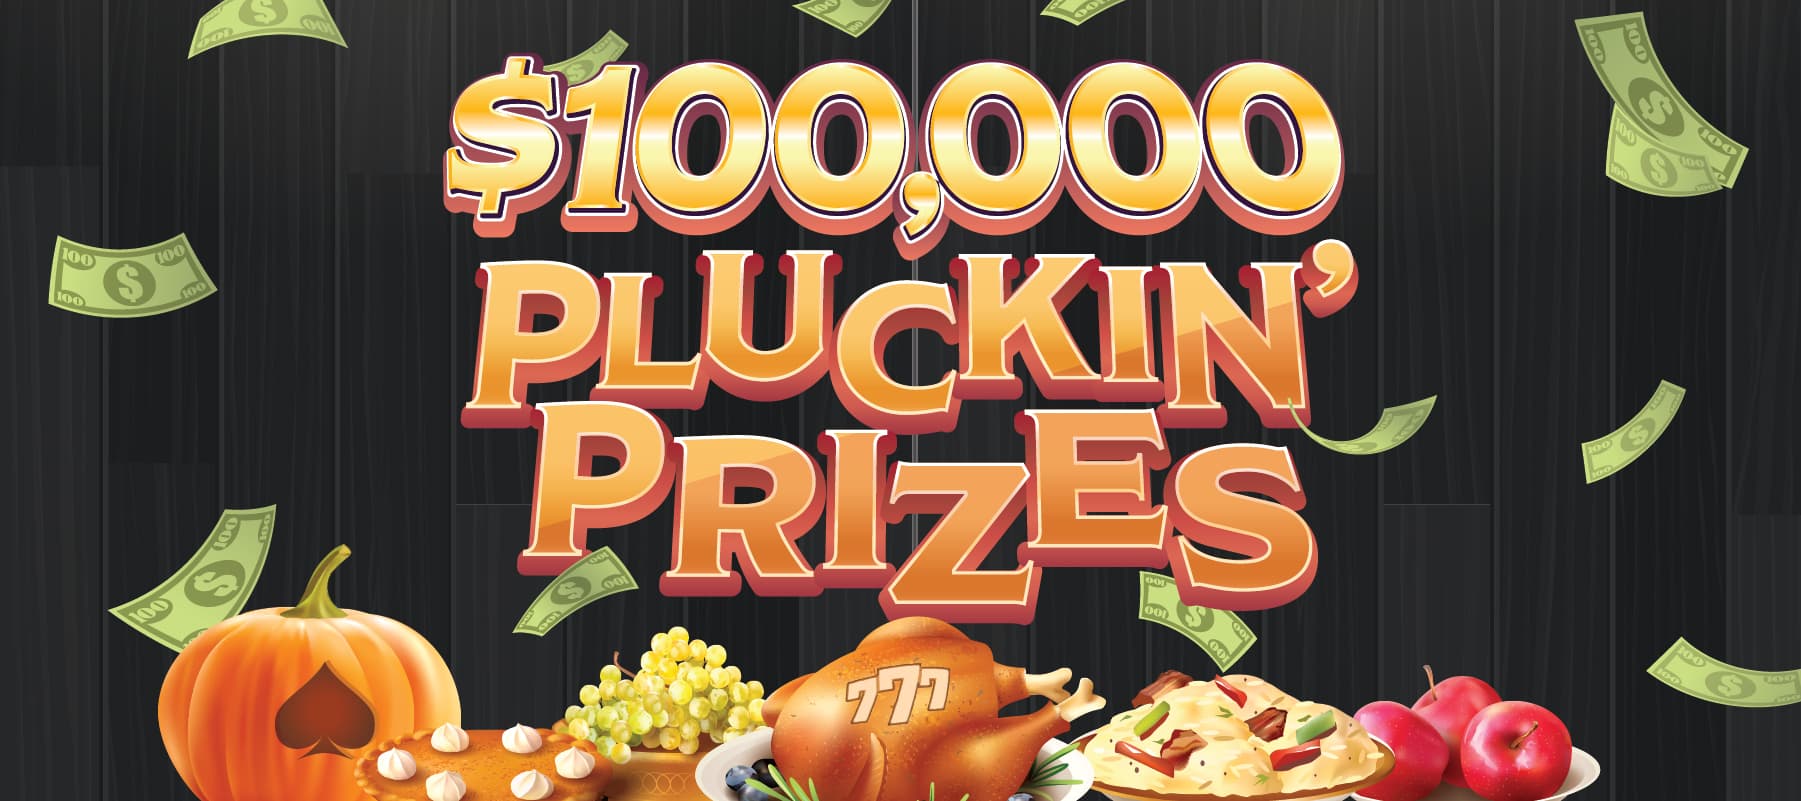 $100,000 Pluckin’ Prizes Promotion